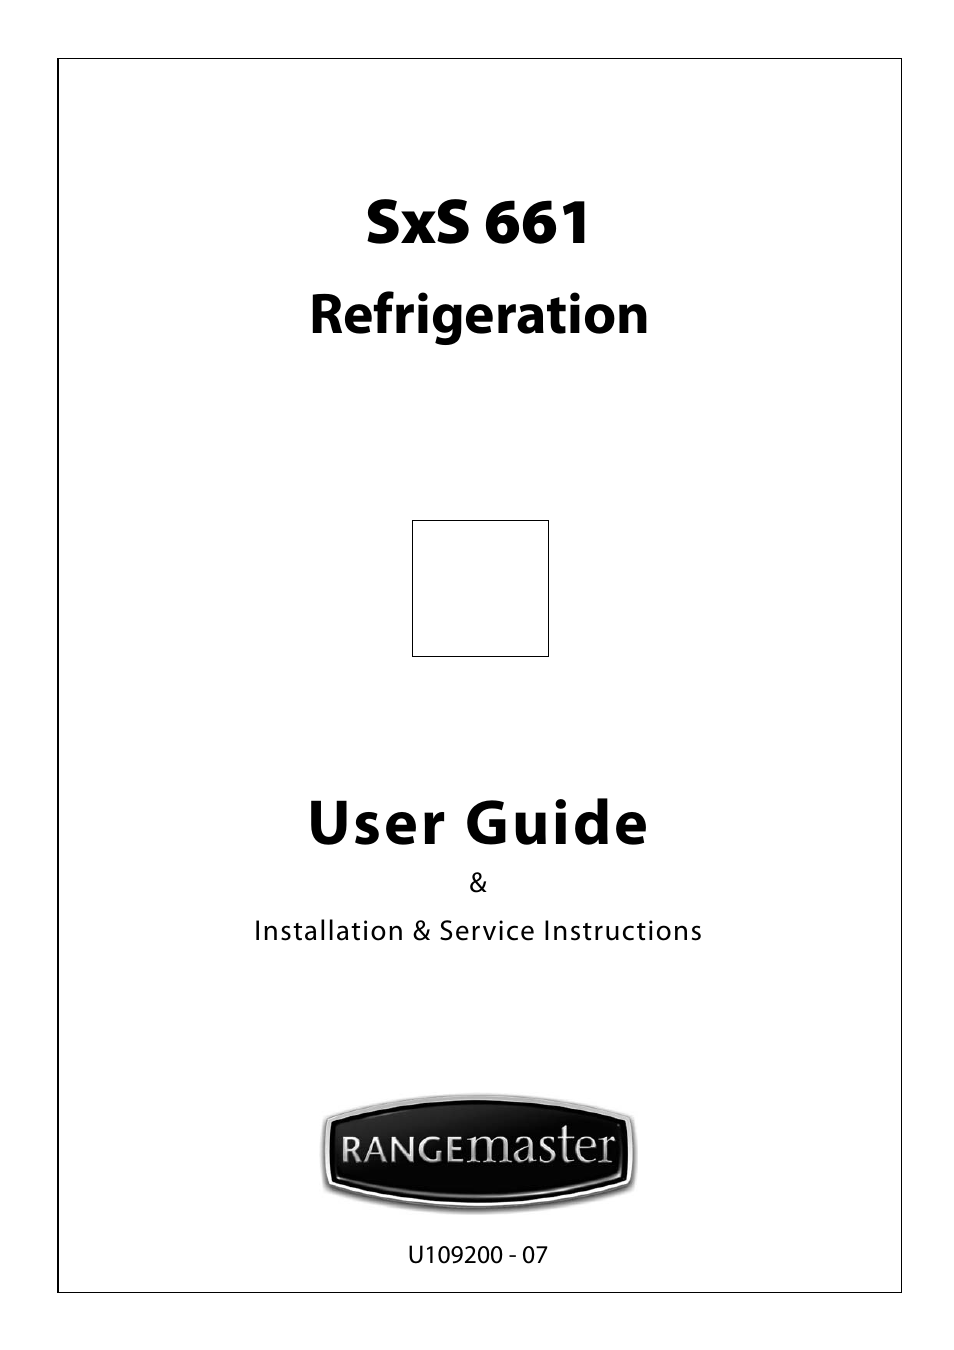 Refrigeration SxS 661